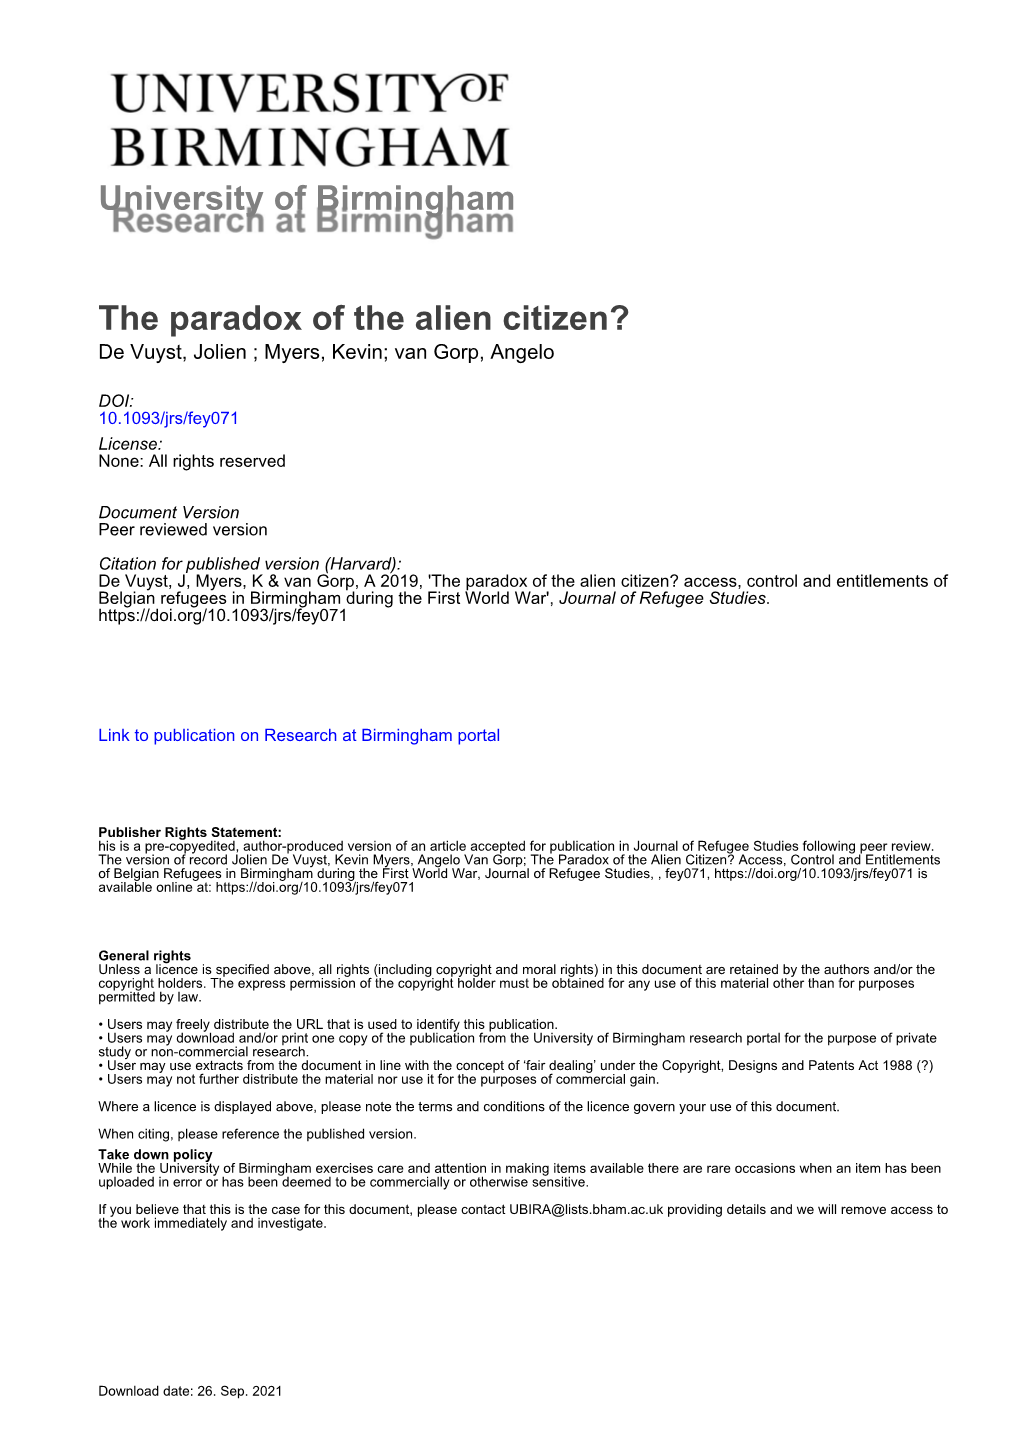 University of Birmingham the Paradox of the Alien Citizen?